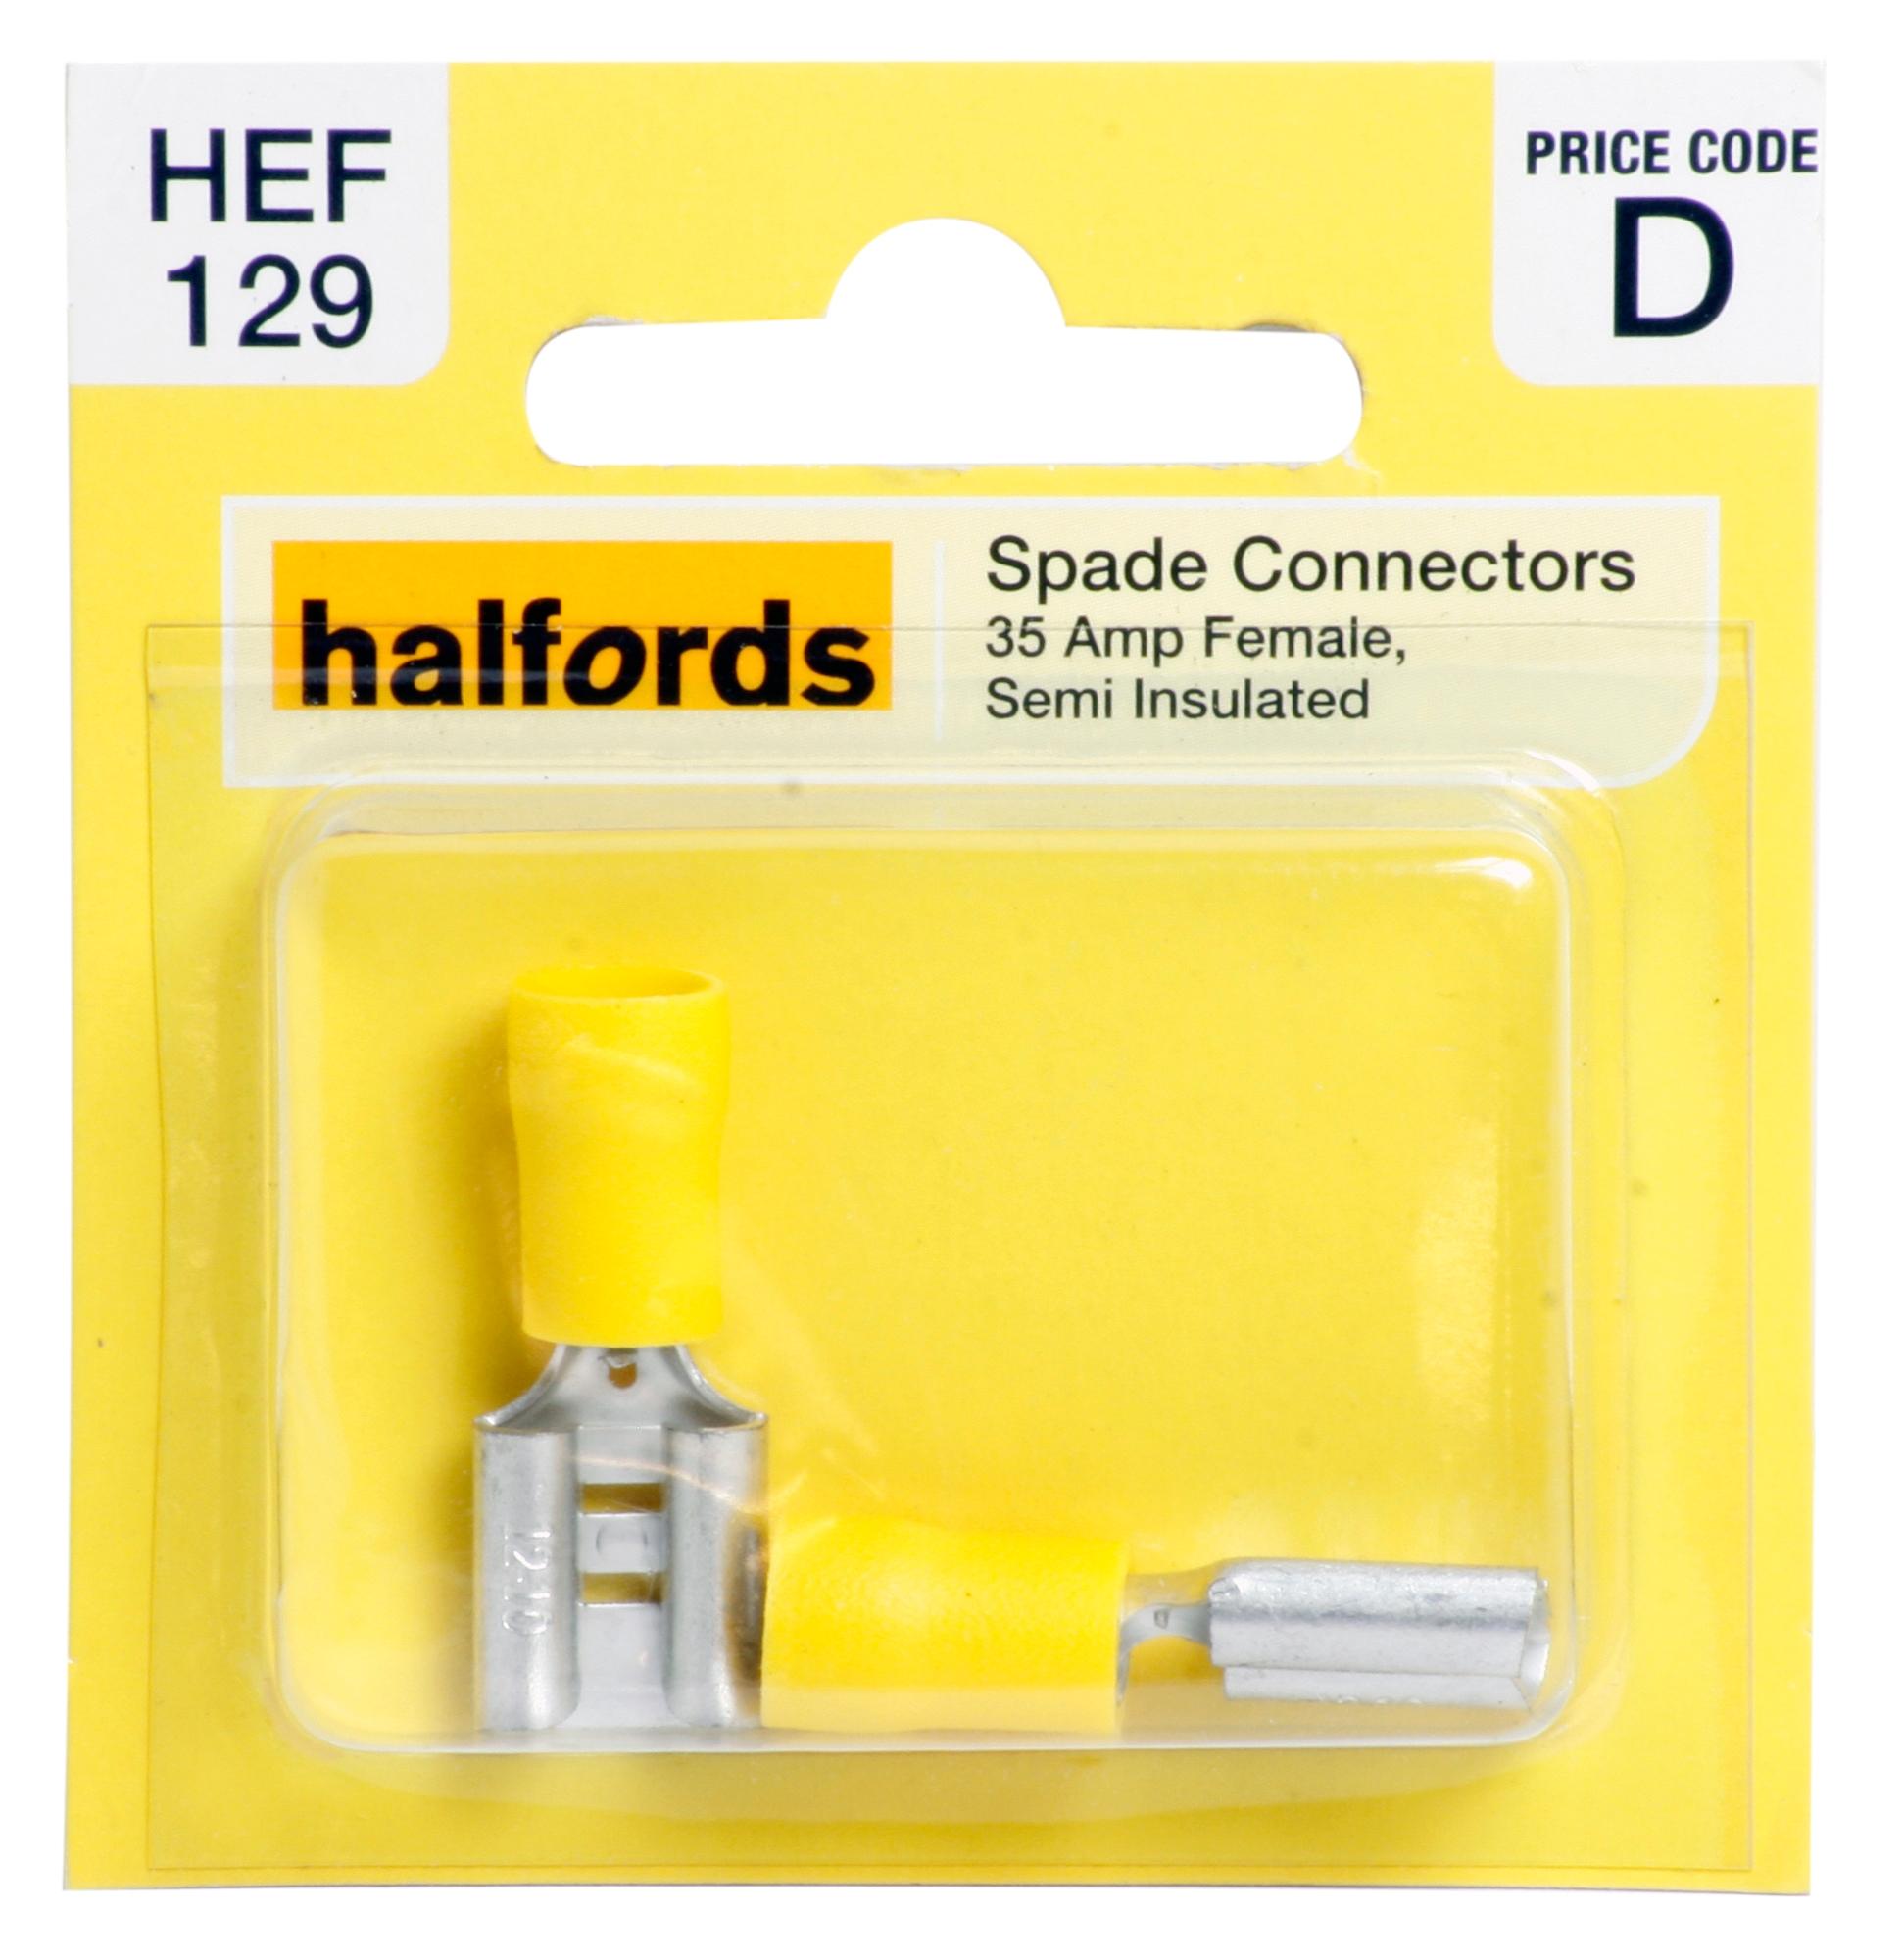 Halfords Spade Connectors (Hef129) 35 Amp/Female